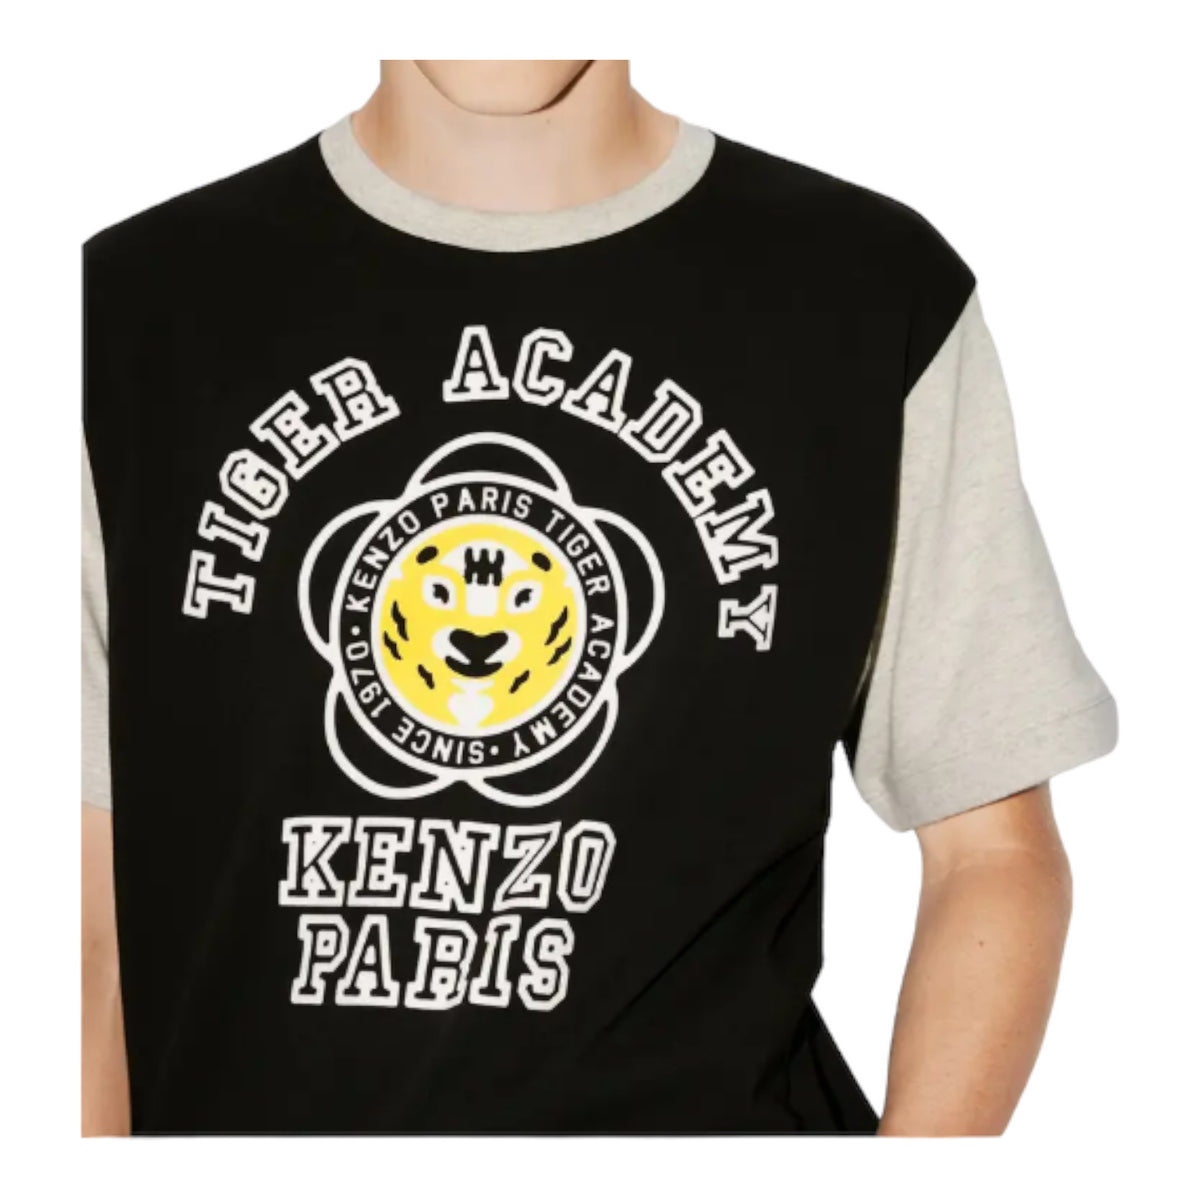 Kenzo Men's 'Tiger Academy' T-Shirt